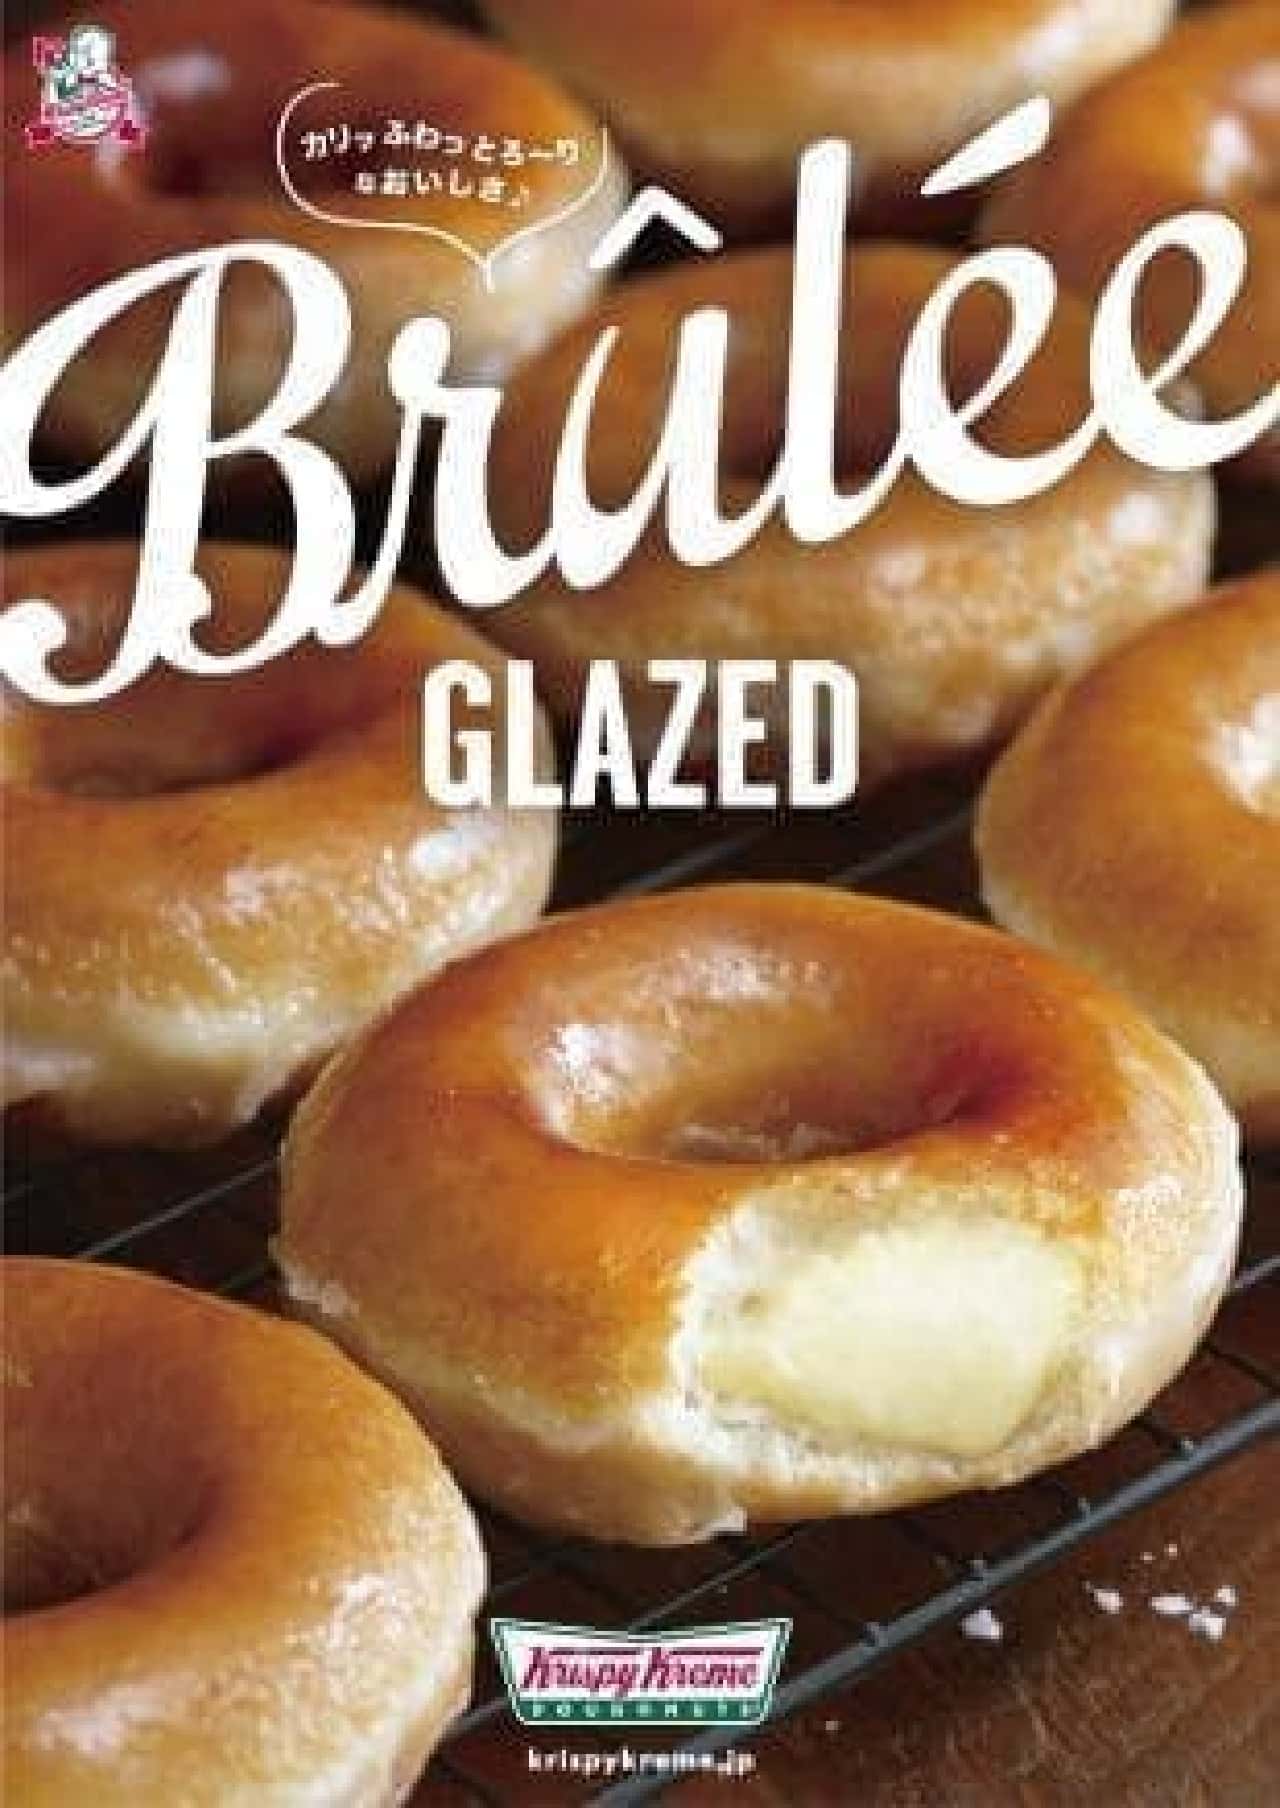 Krispy Kreme Donut "Brule Glazed"